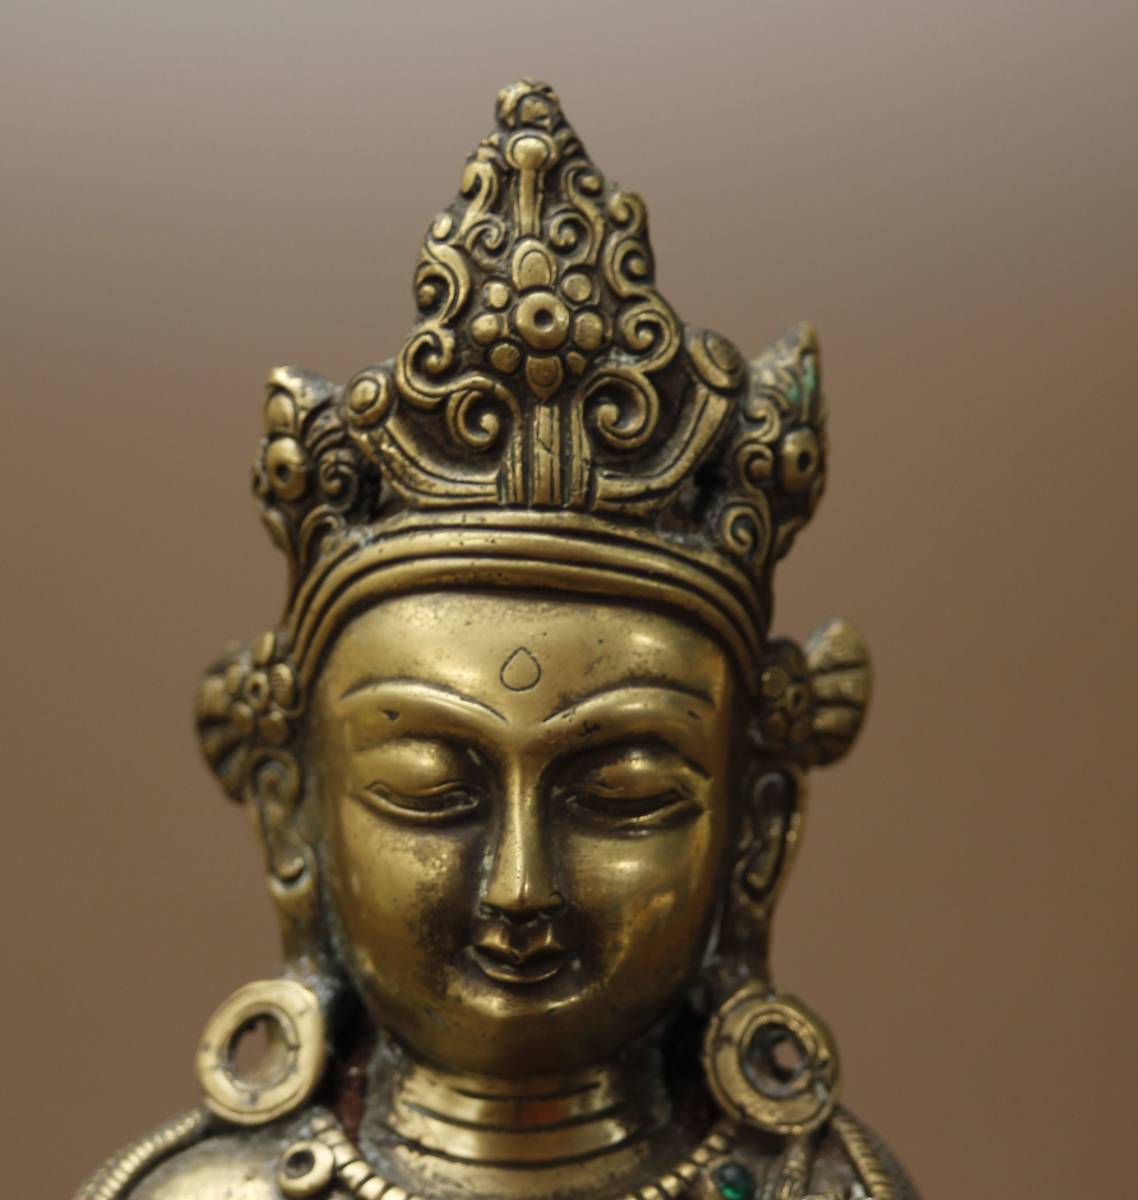 M佛教藝術銅製作G陀羅佛像形象雕像高度18厘米重量1281克 原文:M 仏教美術 銅製 ガンダーラ 仏像 置物 高さ18㎝ 重量1281g